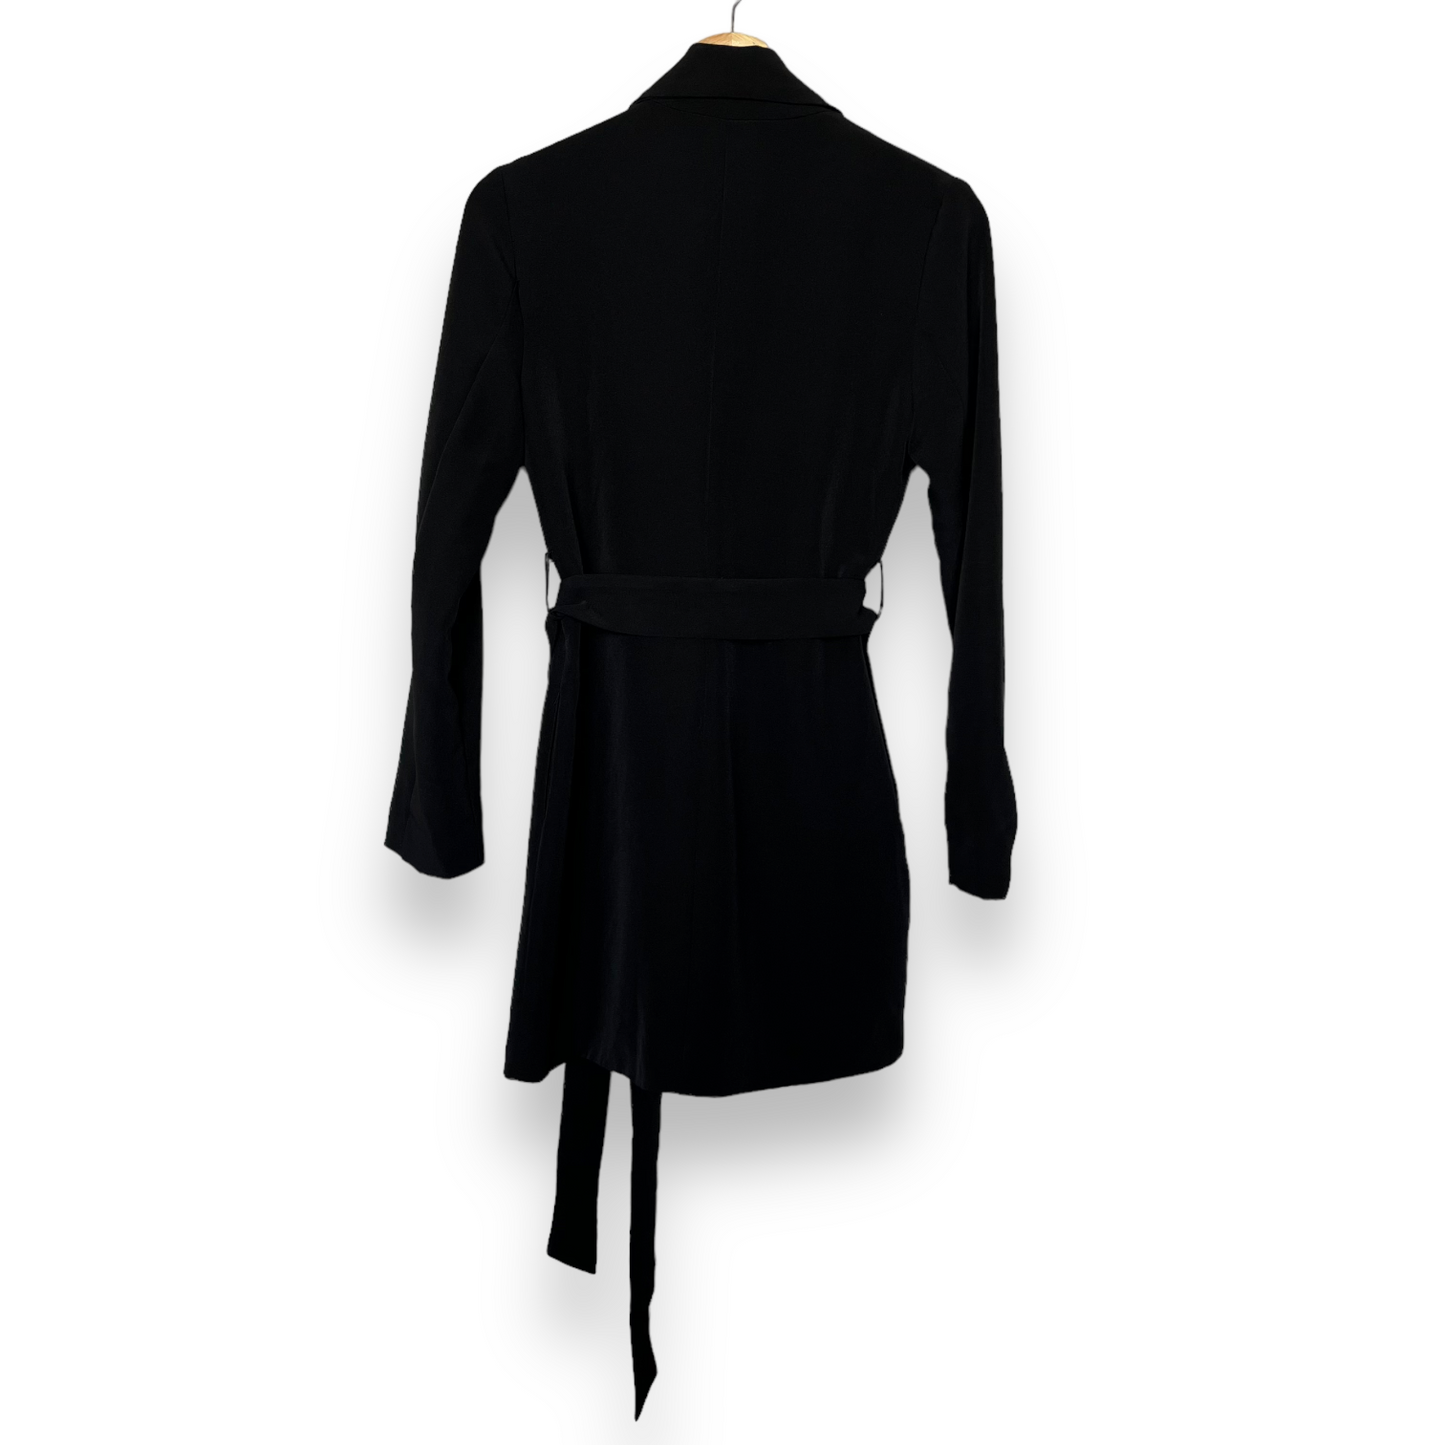 REMI x REVOLVE Meghan Blazer Dress in Black